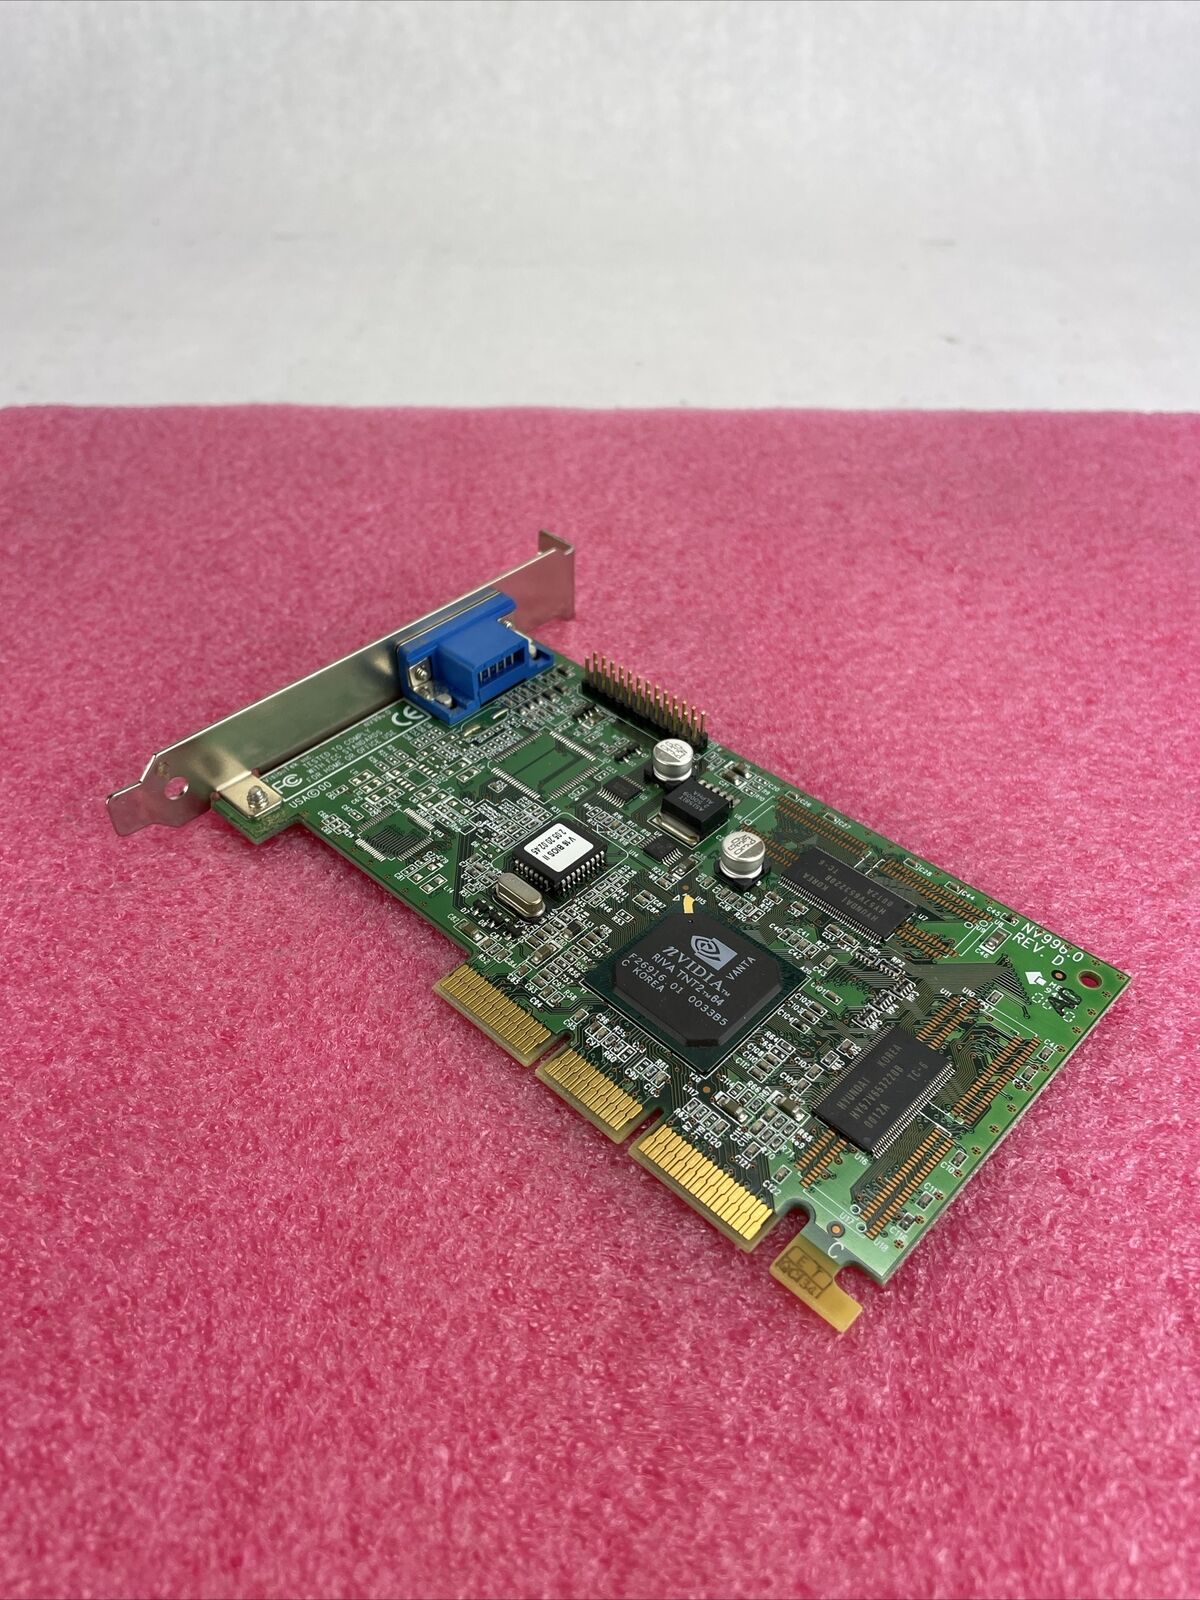 Nvidia Riva TNT2 64 NV996 AGP 1MB Graphics Card